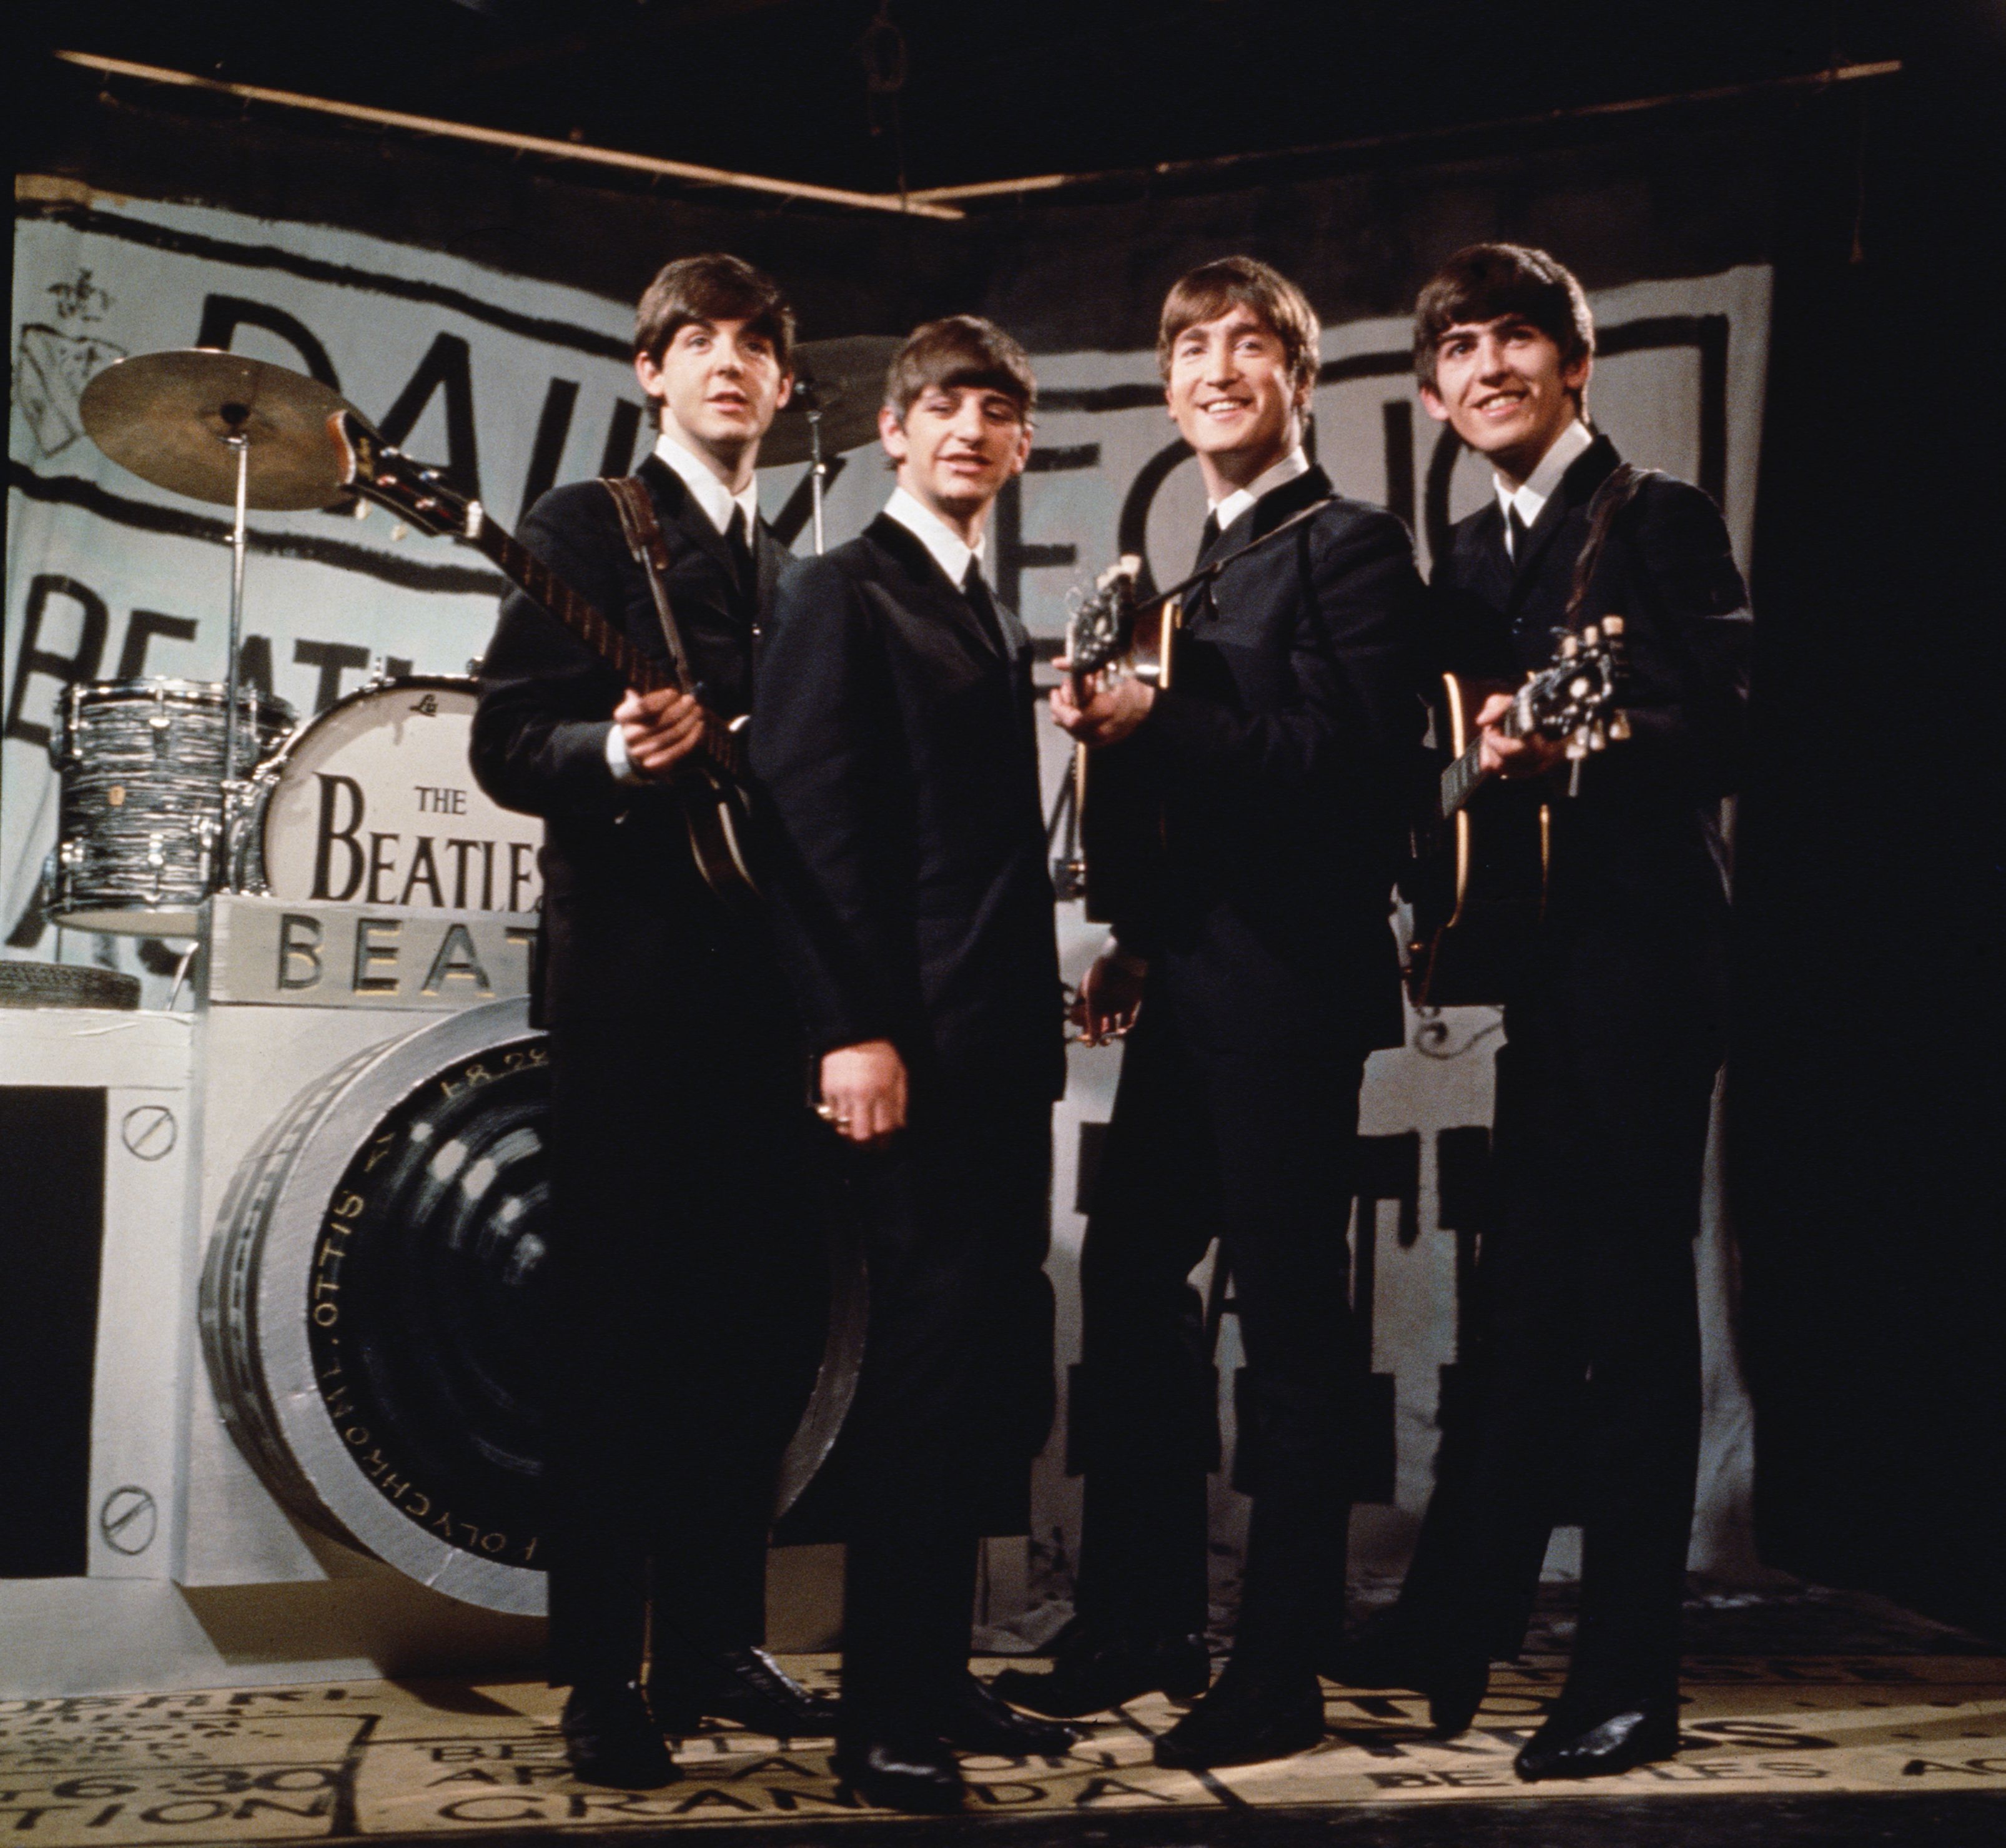 AOTM: The Beatles Snag Best-selling Vinyl for 2017